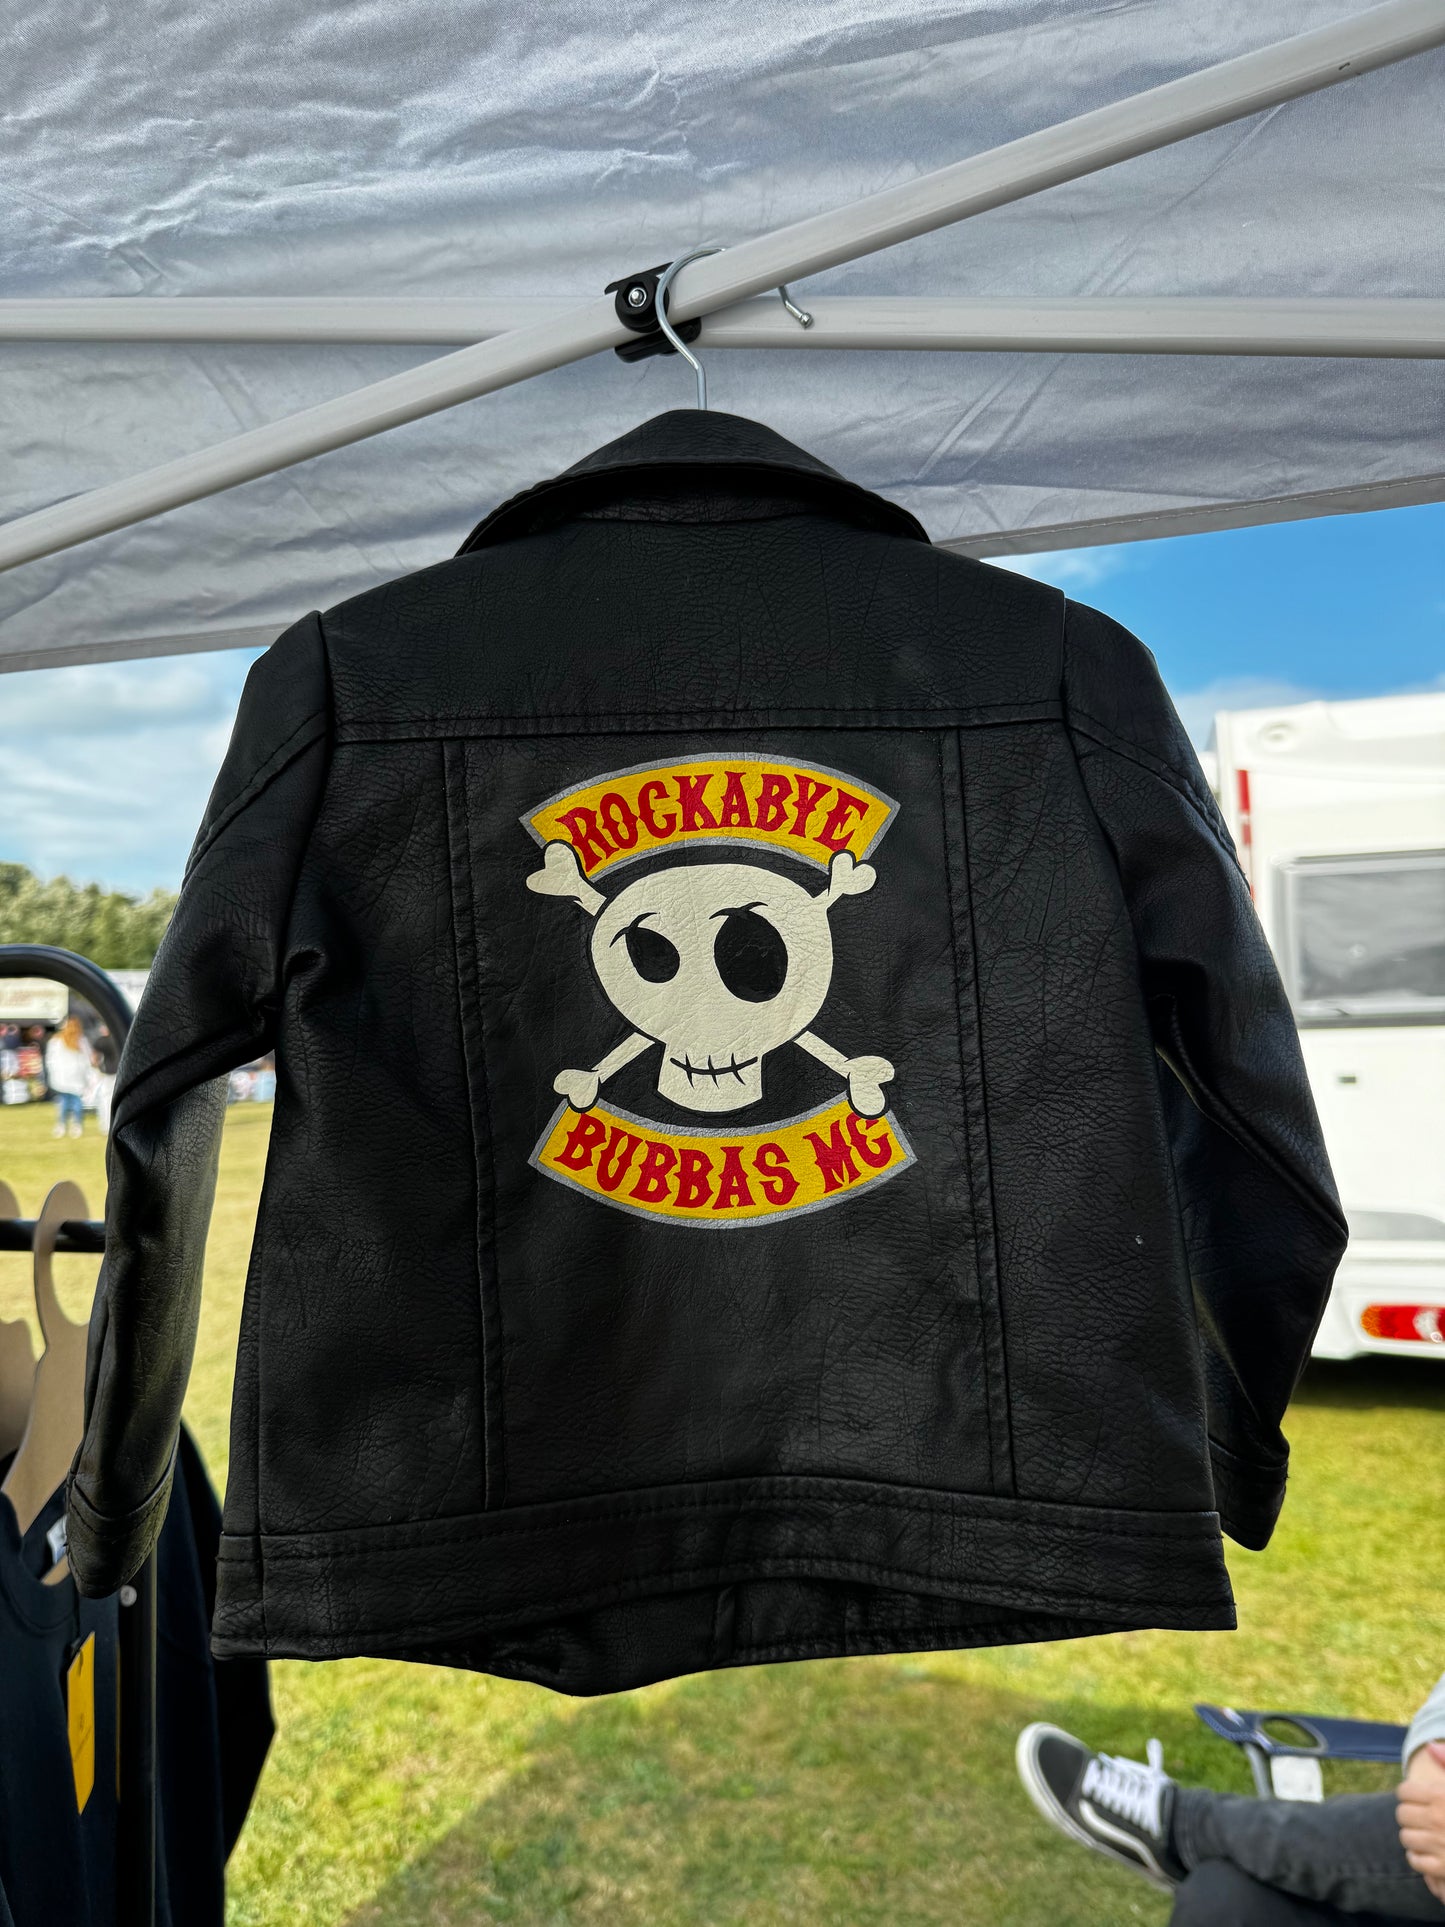 "Rockabye Bubbas MC" Vegan Leather Children's/Toddler's Biker Jacket